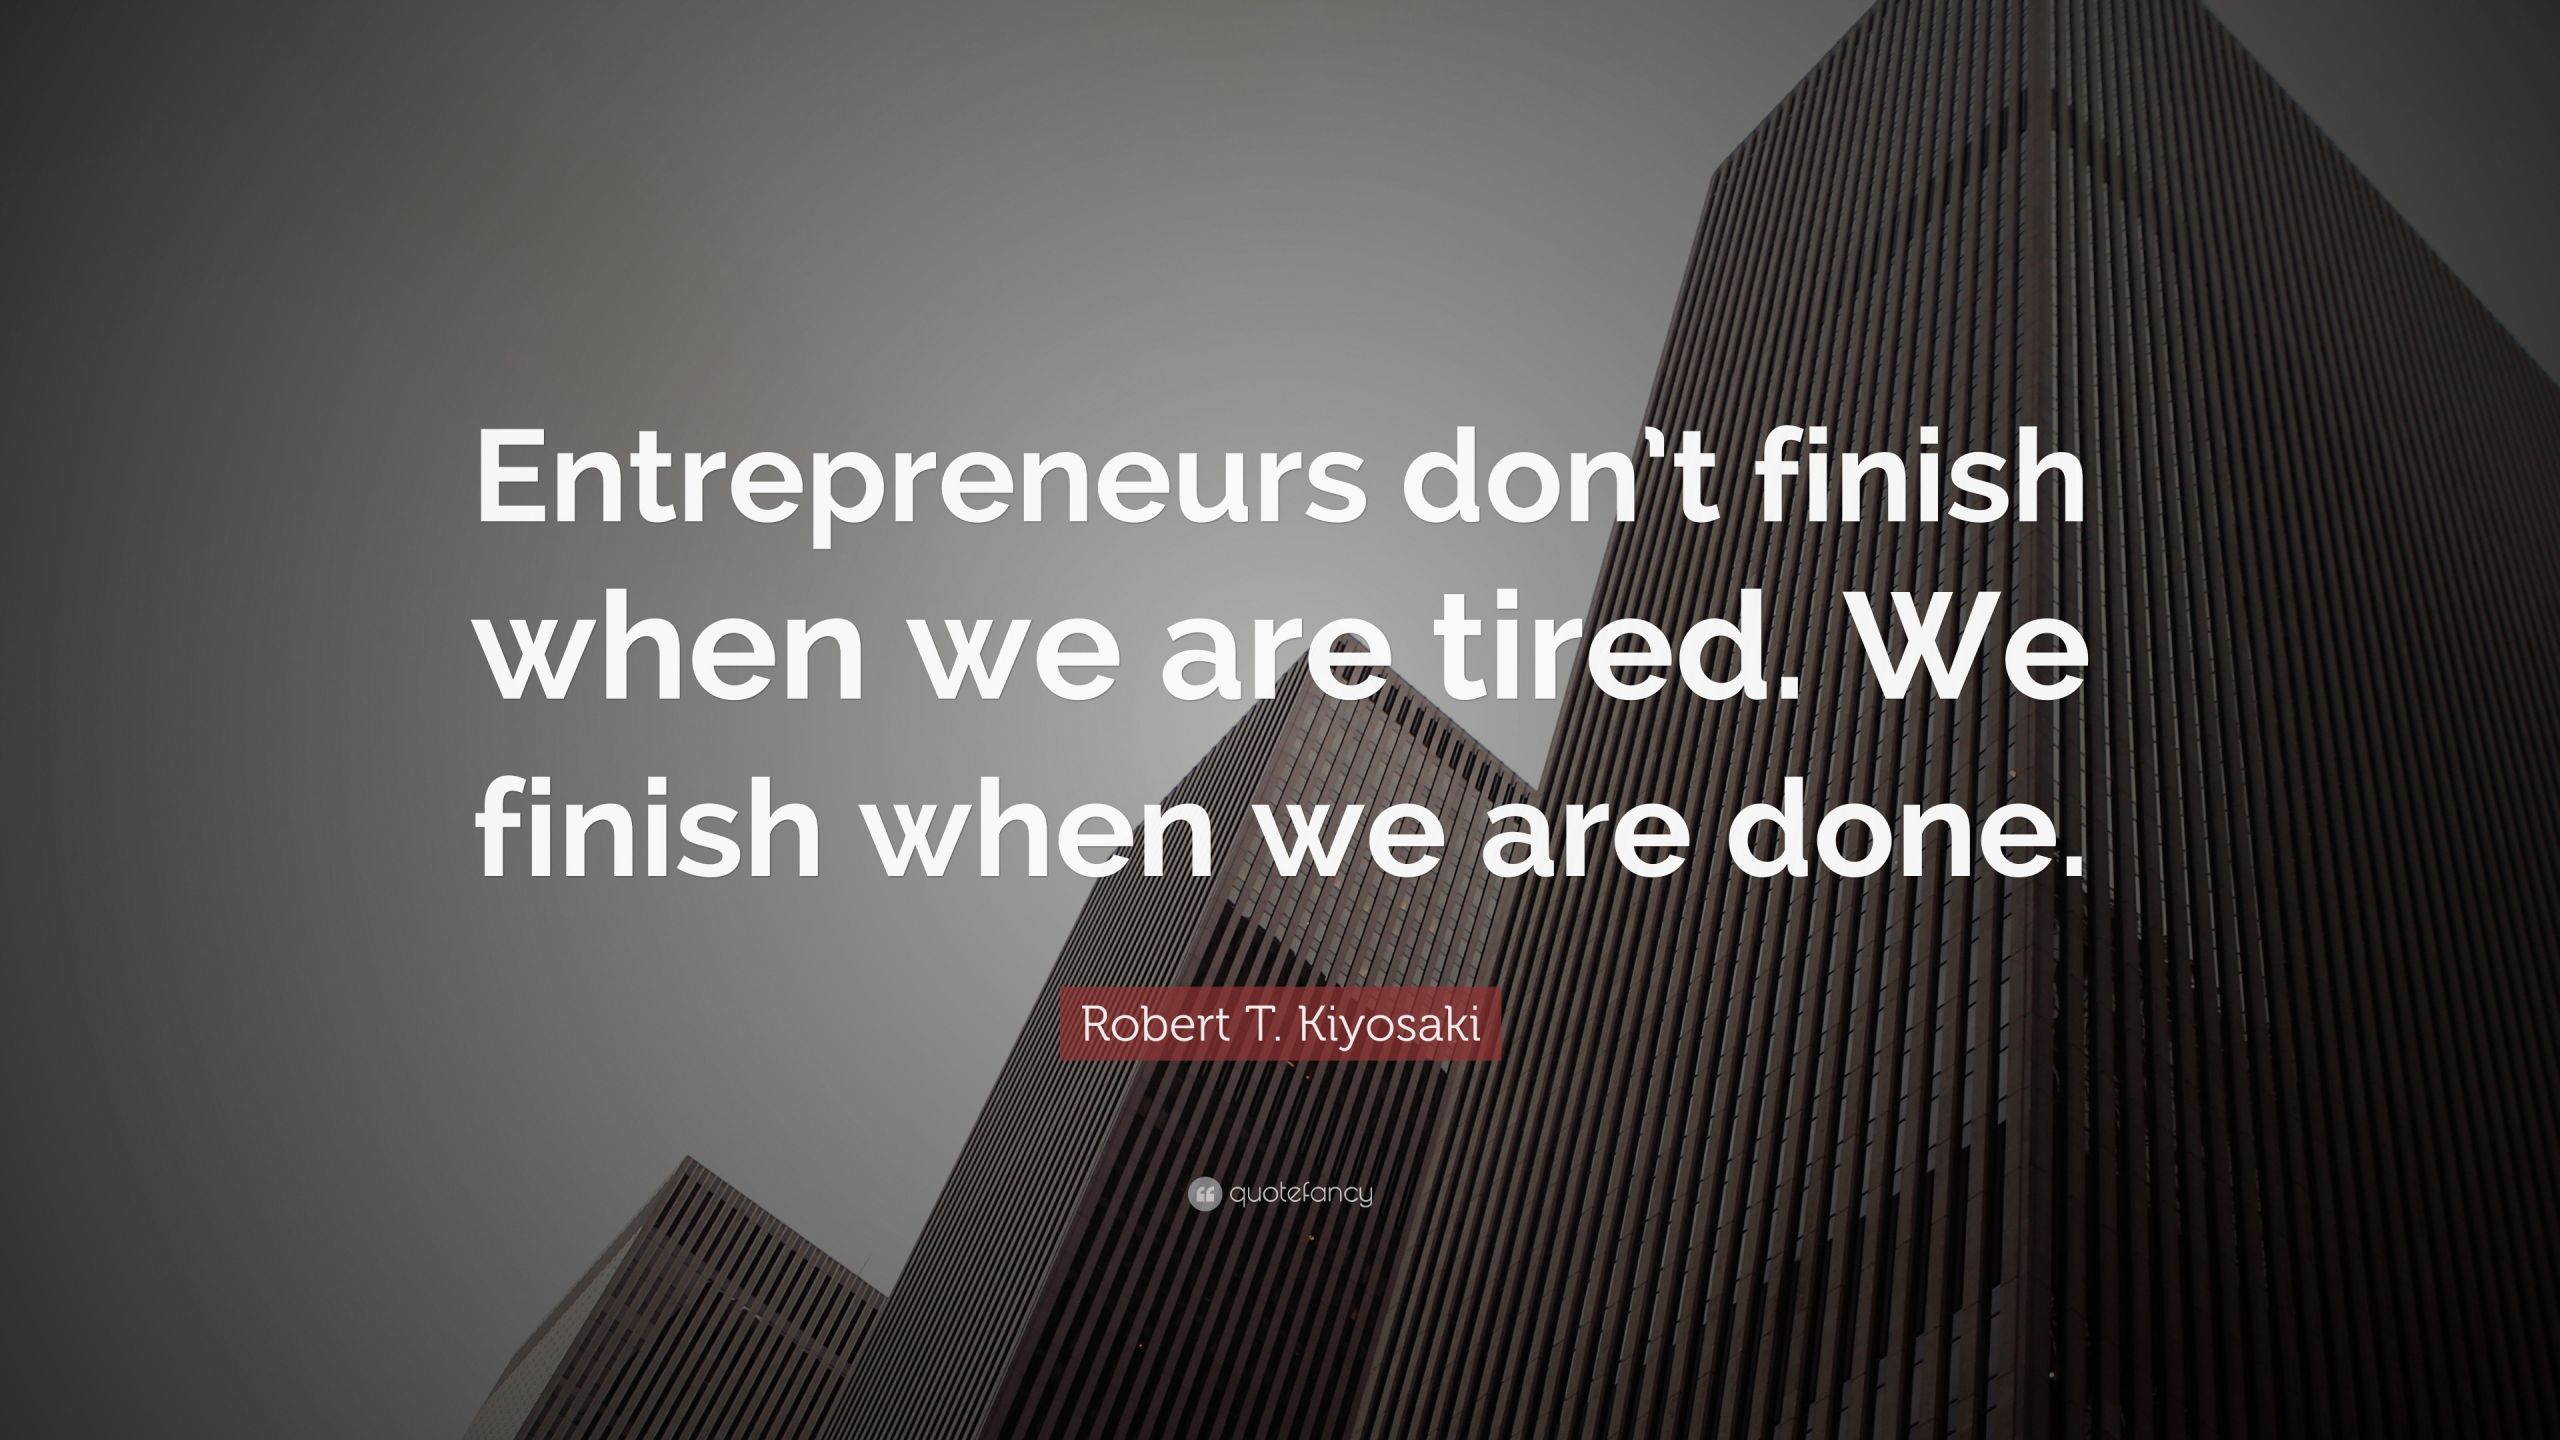 Inspirational Entrepreneur Quotes
 Inspirational Entrepreneurship Quotes 100 wallpapers